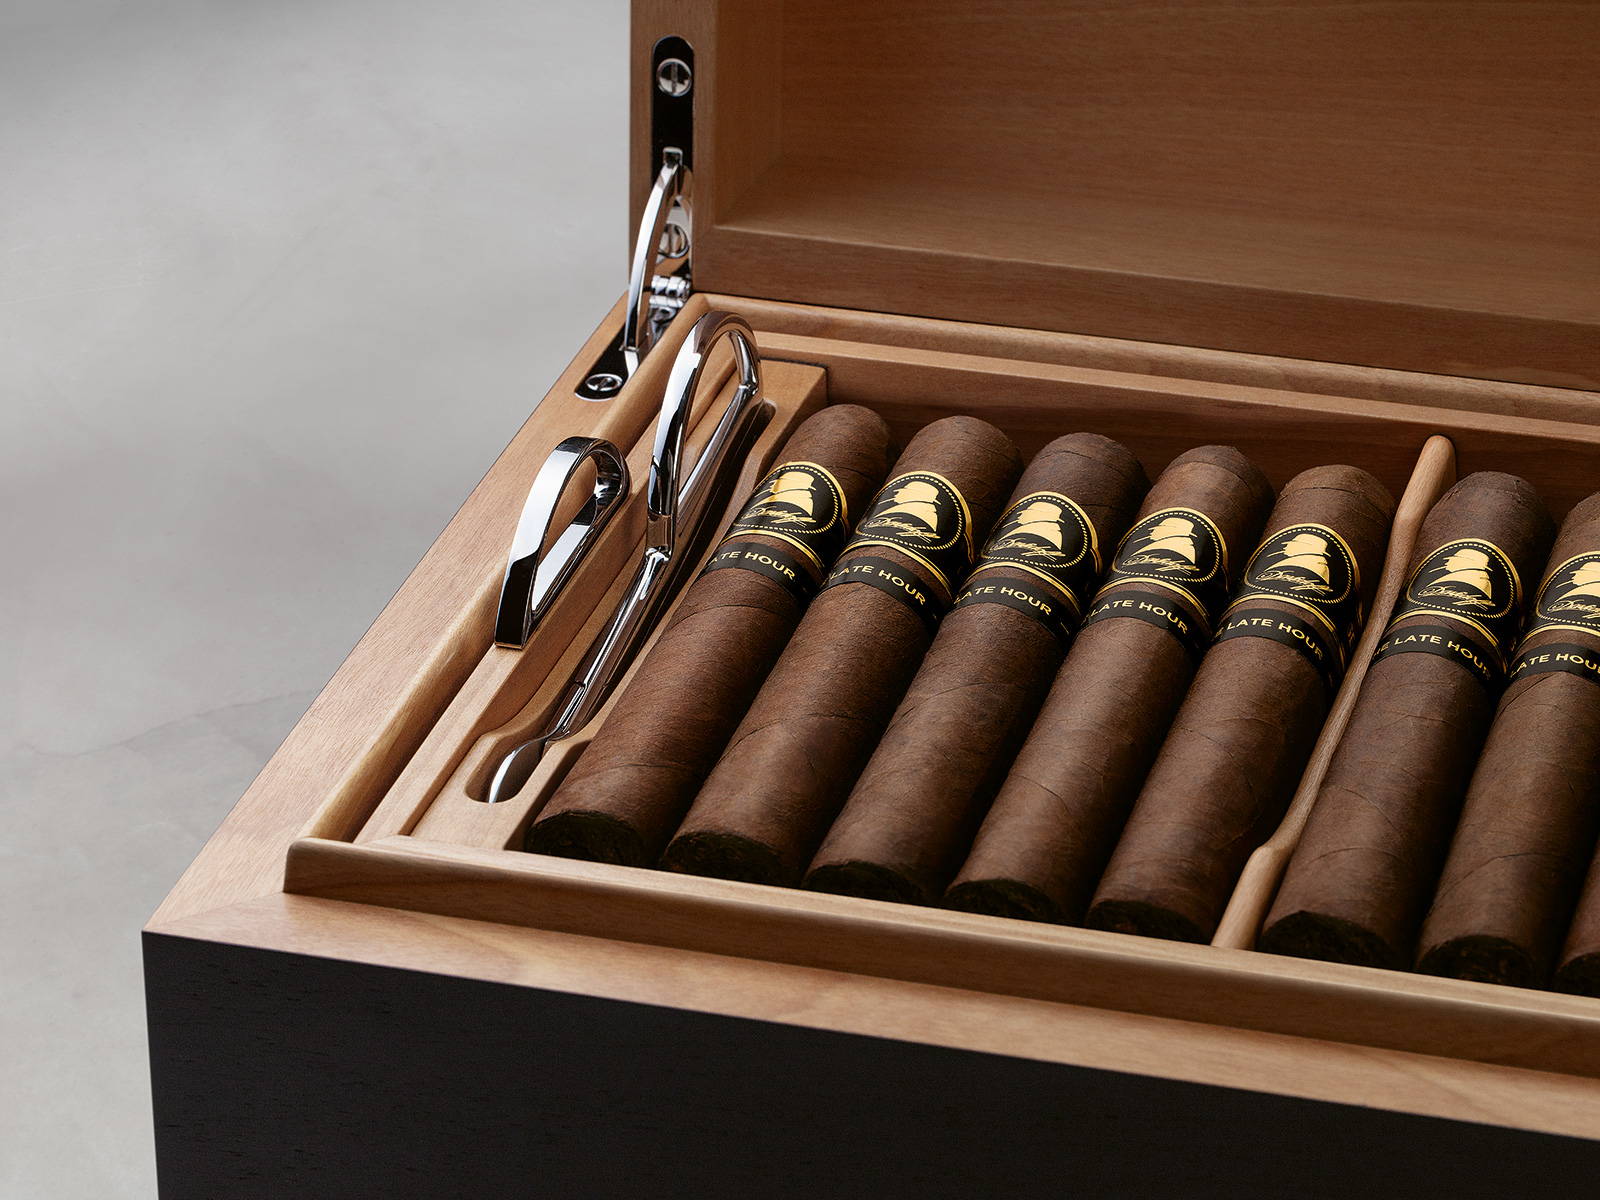 2. Opened Davidoff Winston Churchill Ambassador Humidor with «The Late Hour Series» cigars inside.